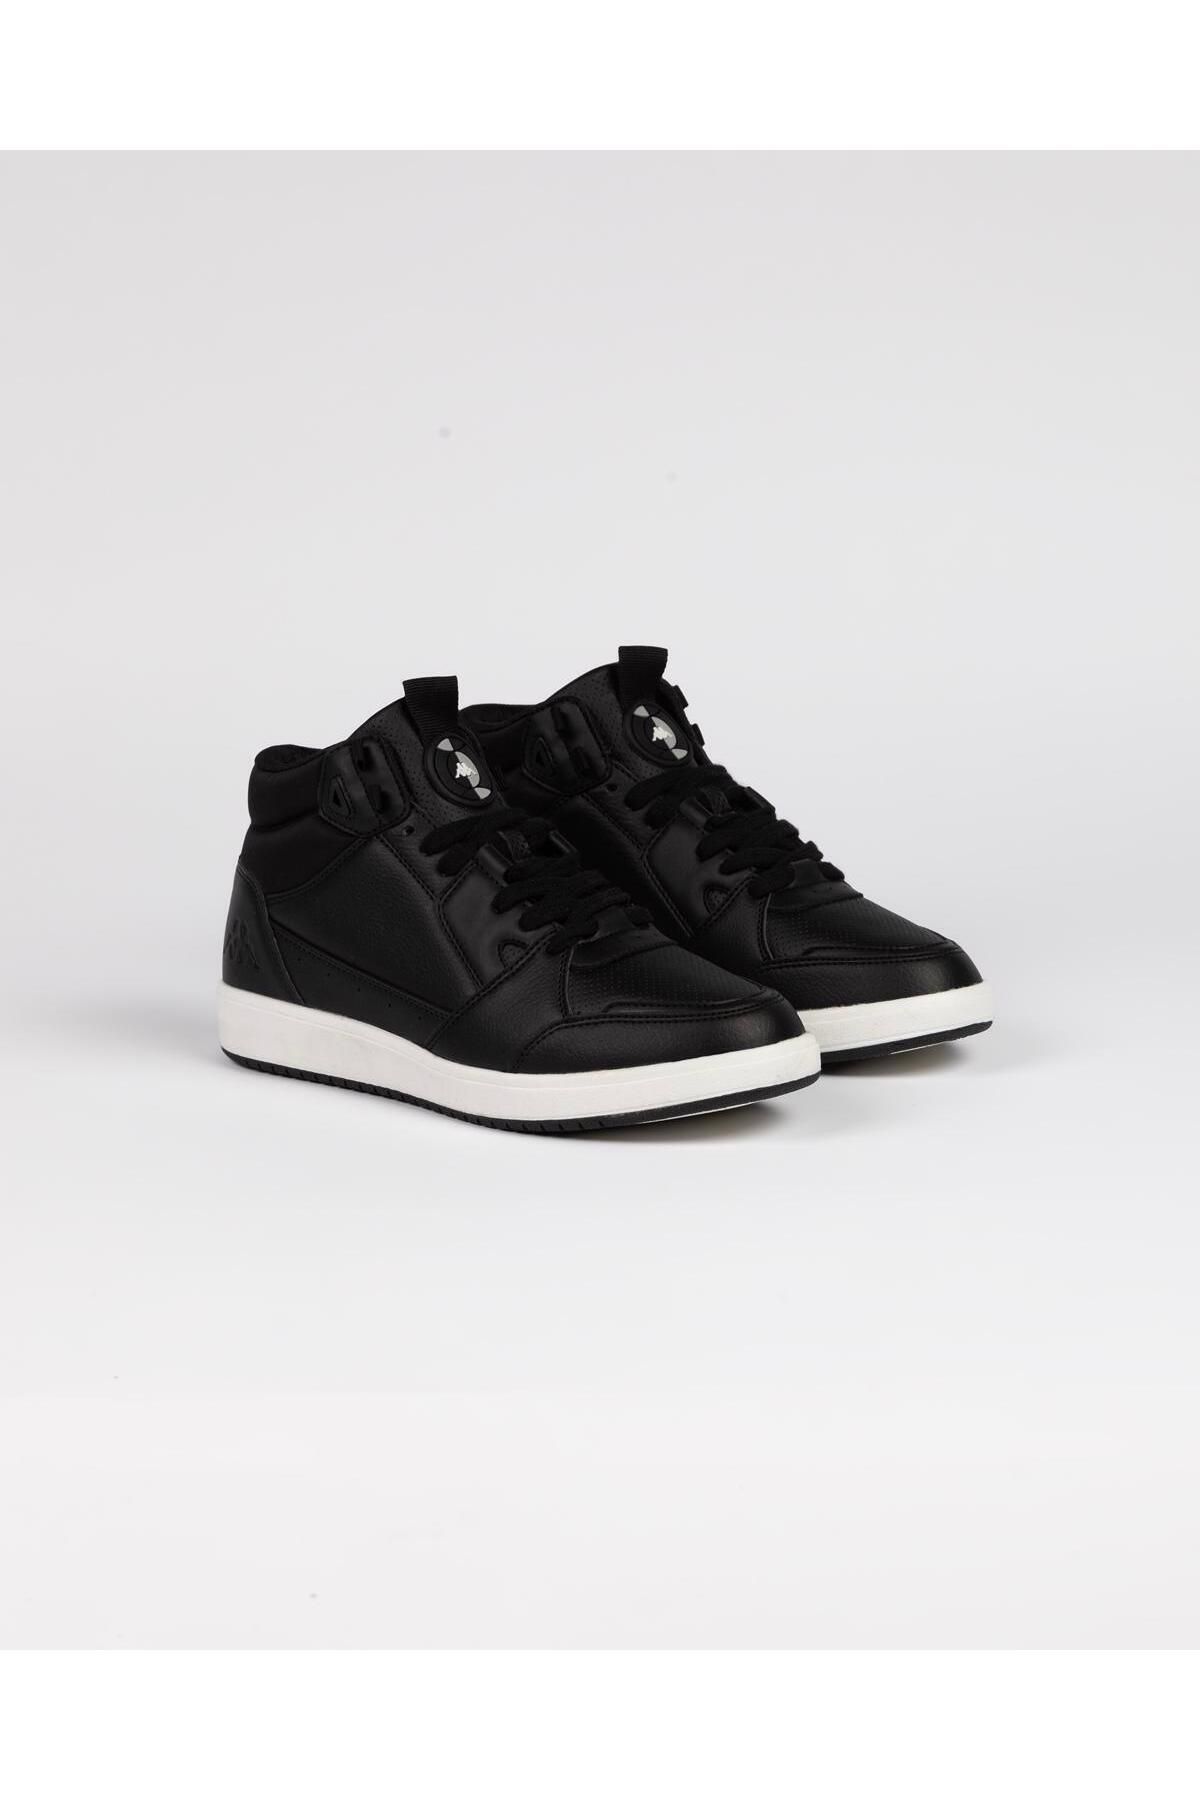 Kappa Authentic Linat 1 Unisex Siyah - Beyaz Sneaker